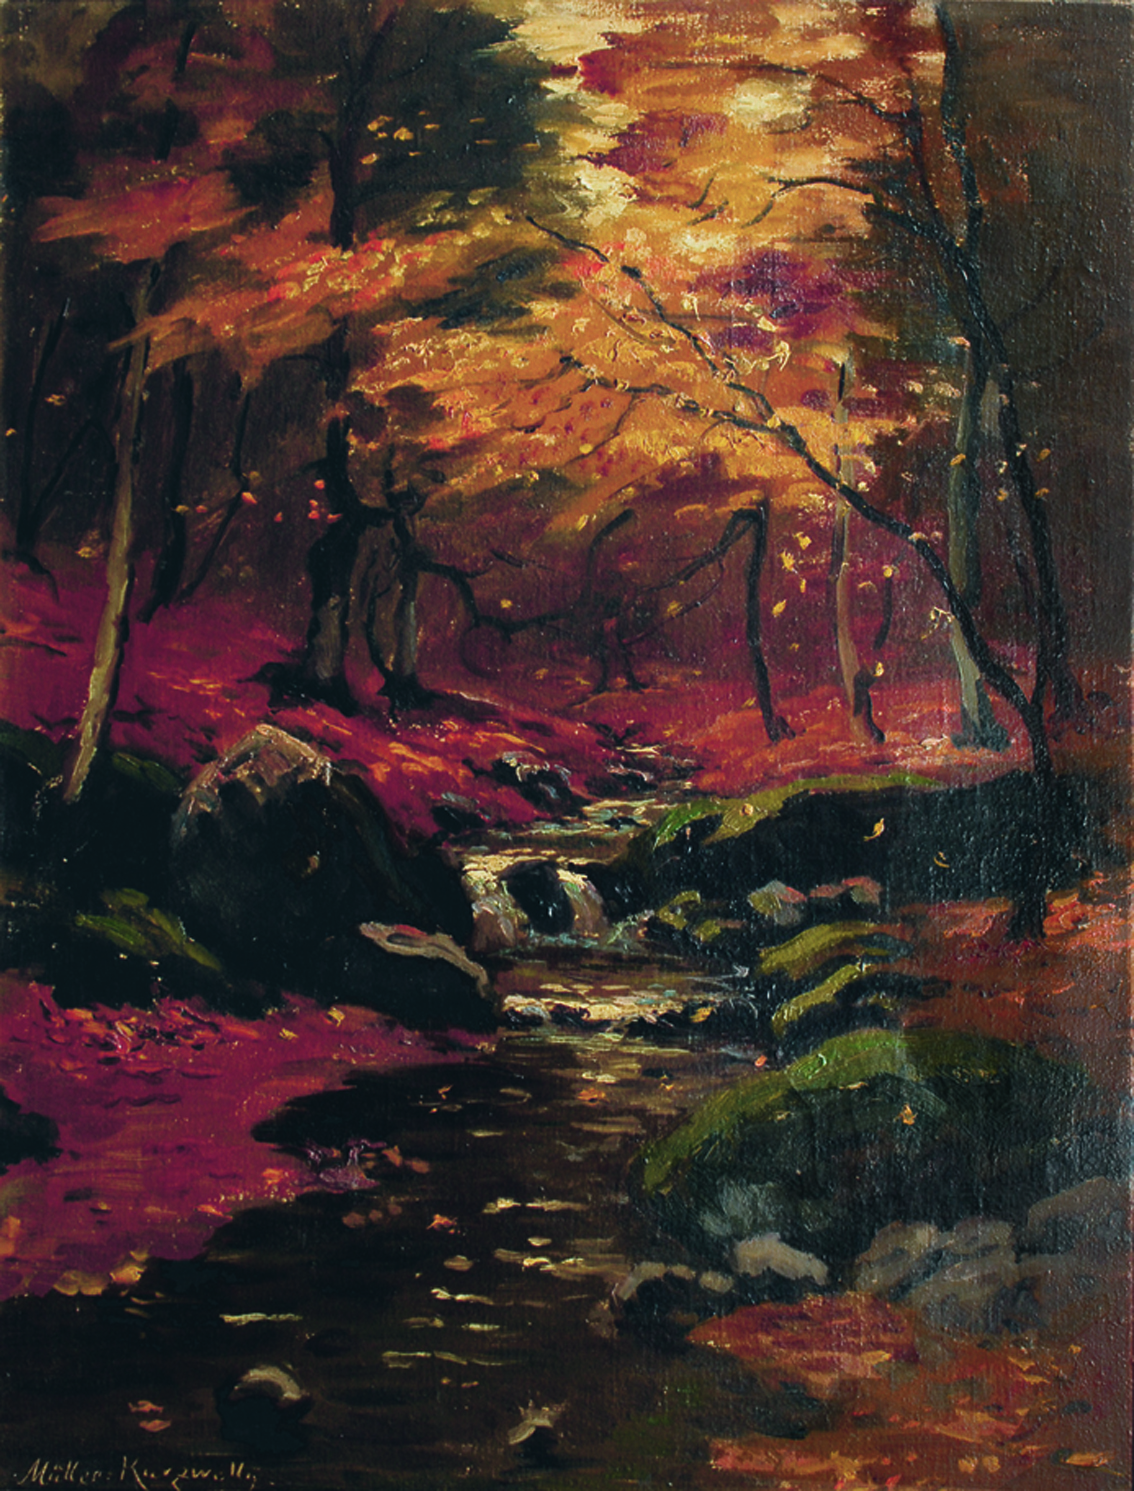 Bachlauf im Herbstwald